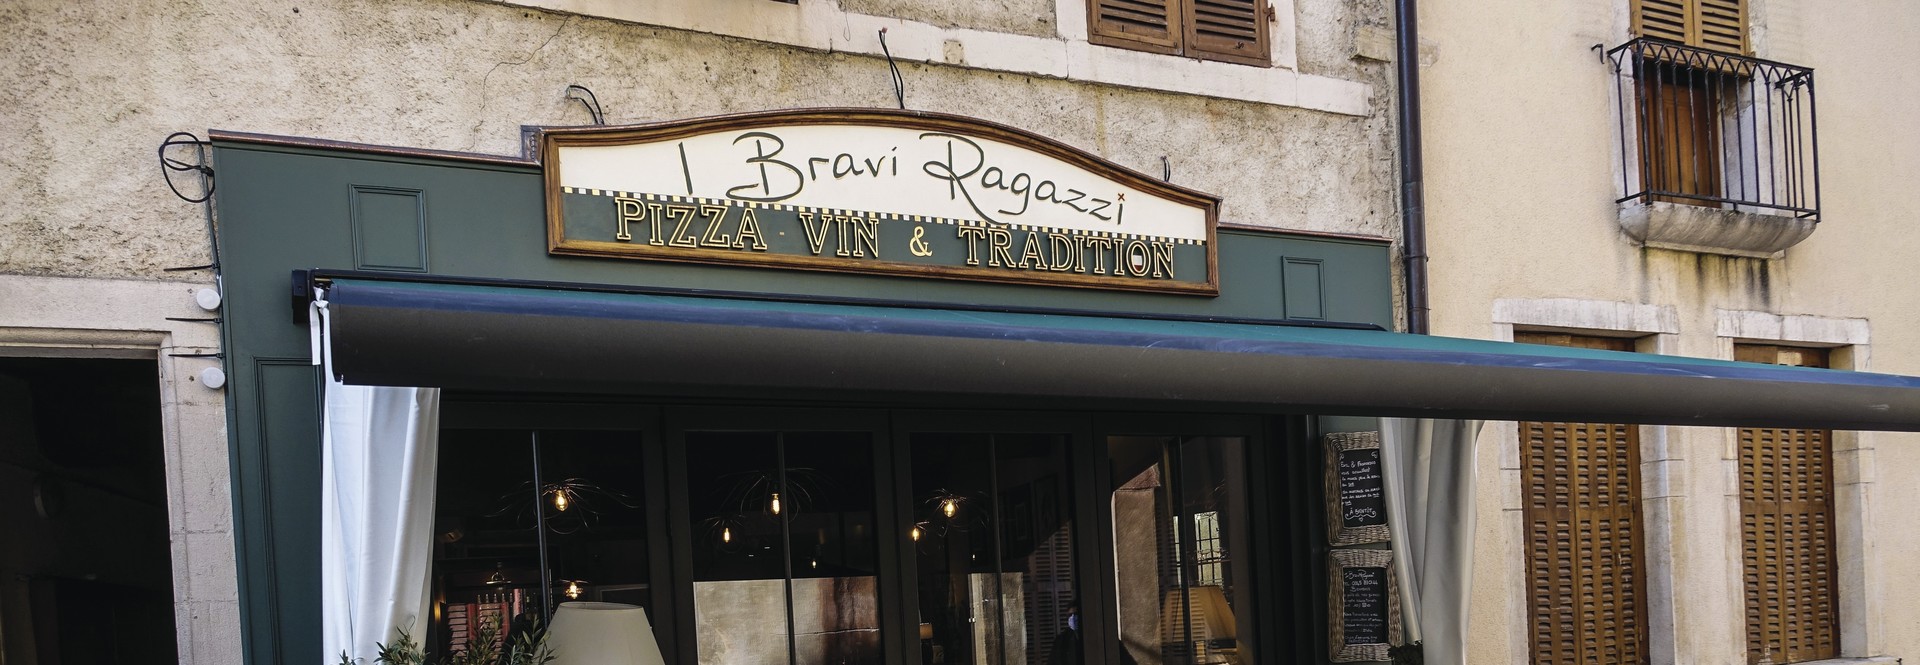 Boutique Pizzeria I BRAVI RAGAZZI - Gevrey Nuits Commerces